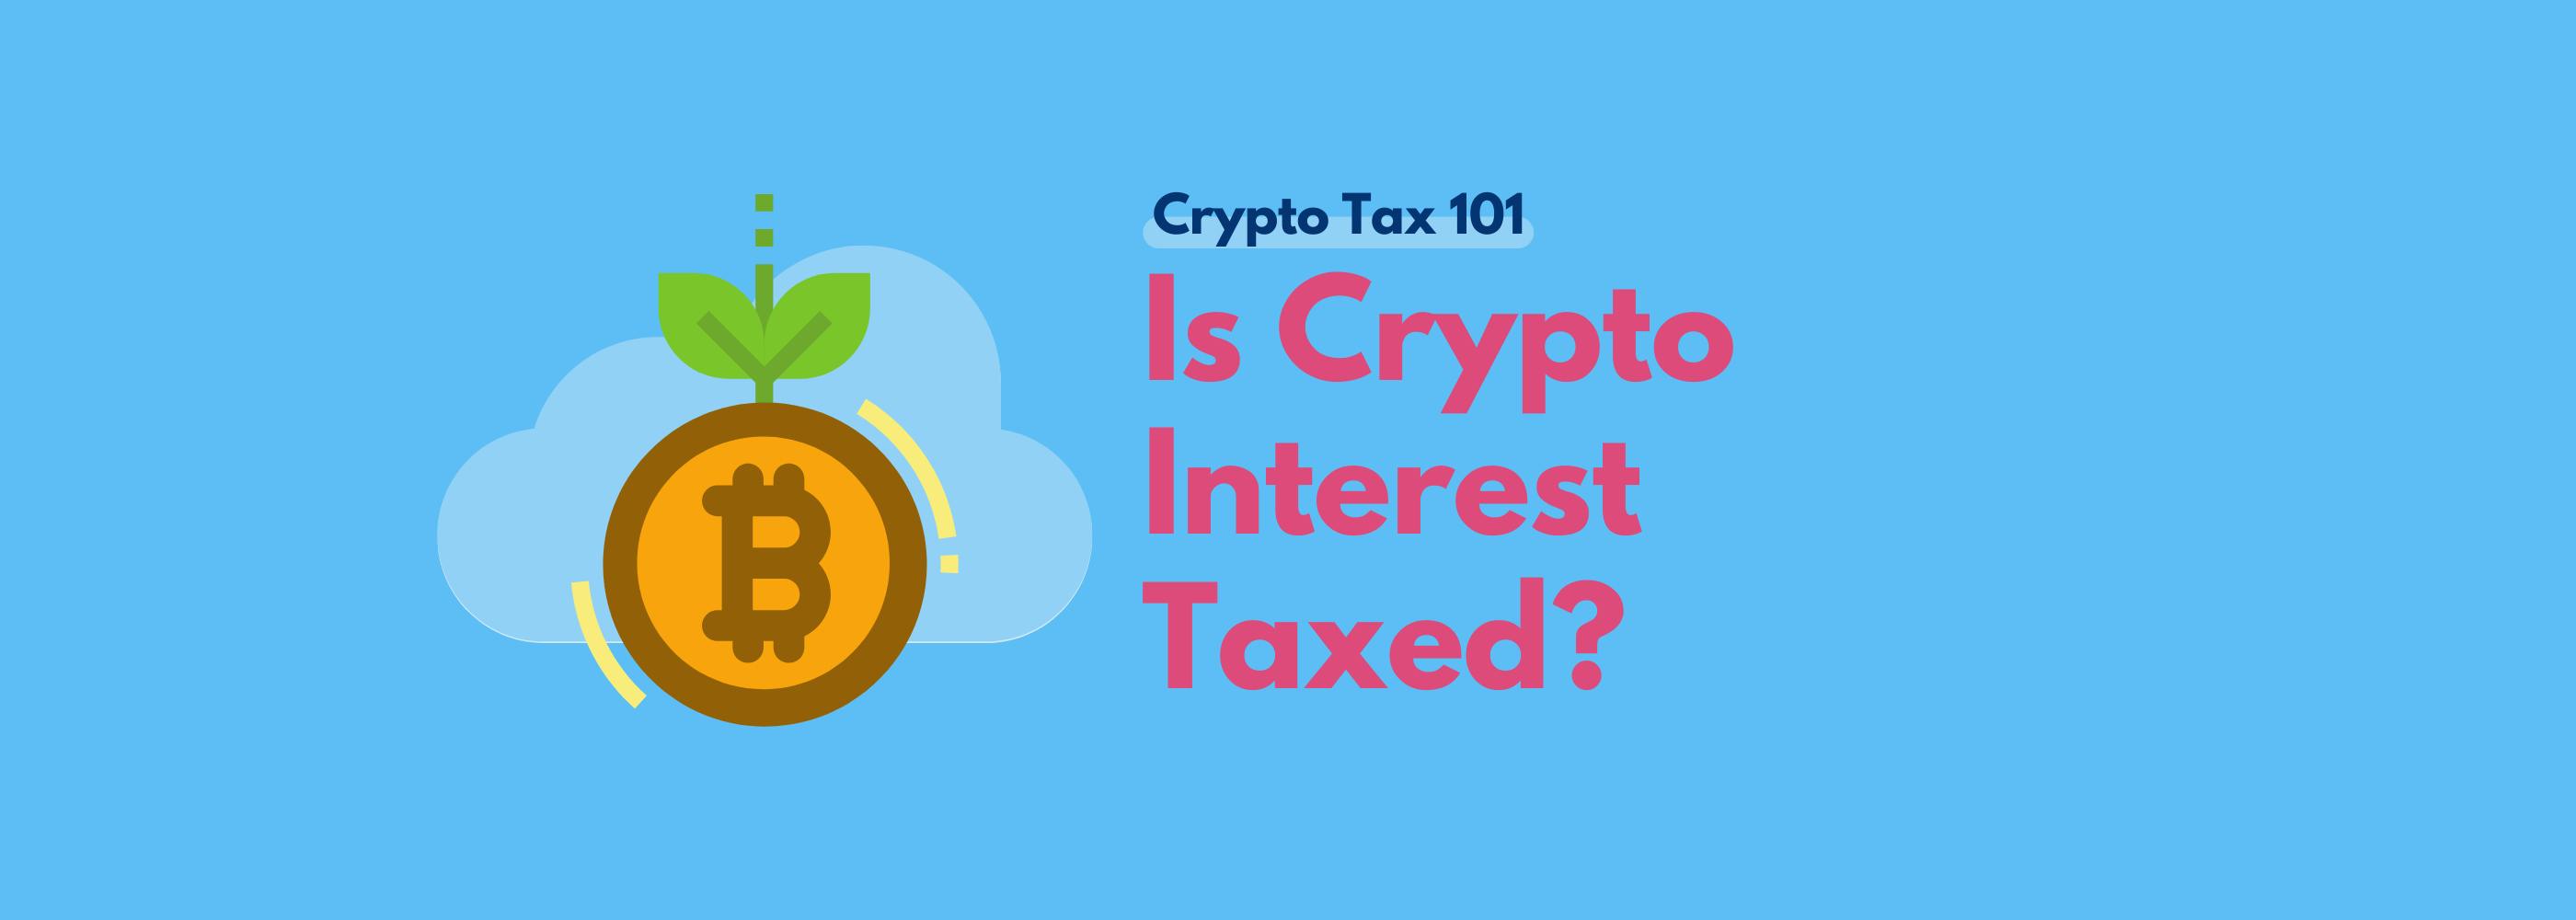 Koinly crypto tax calculator explains crypto interest tax